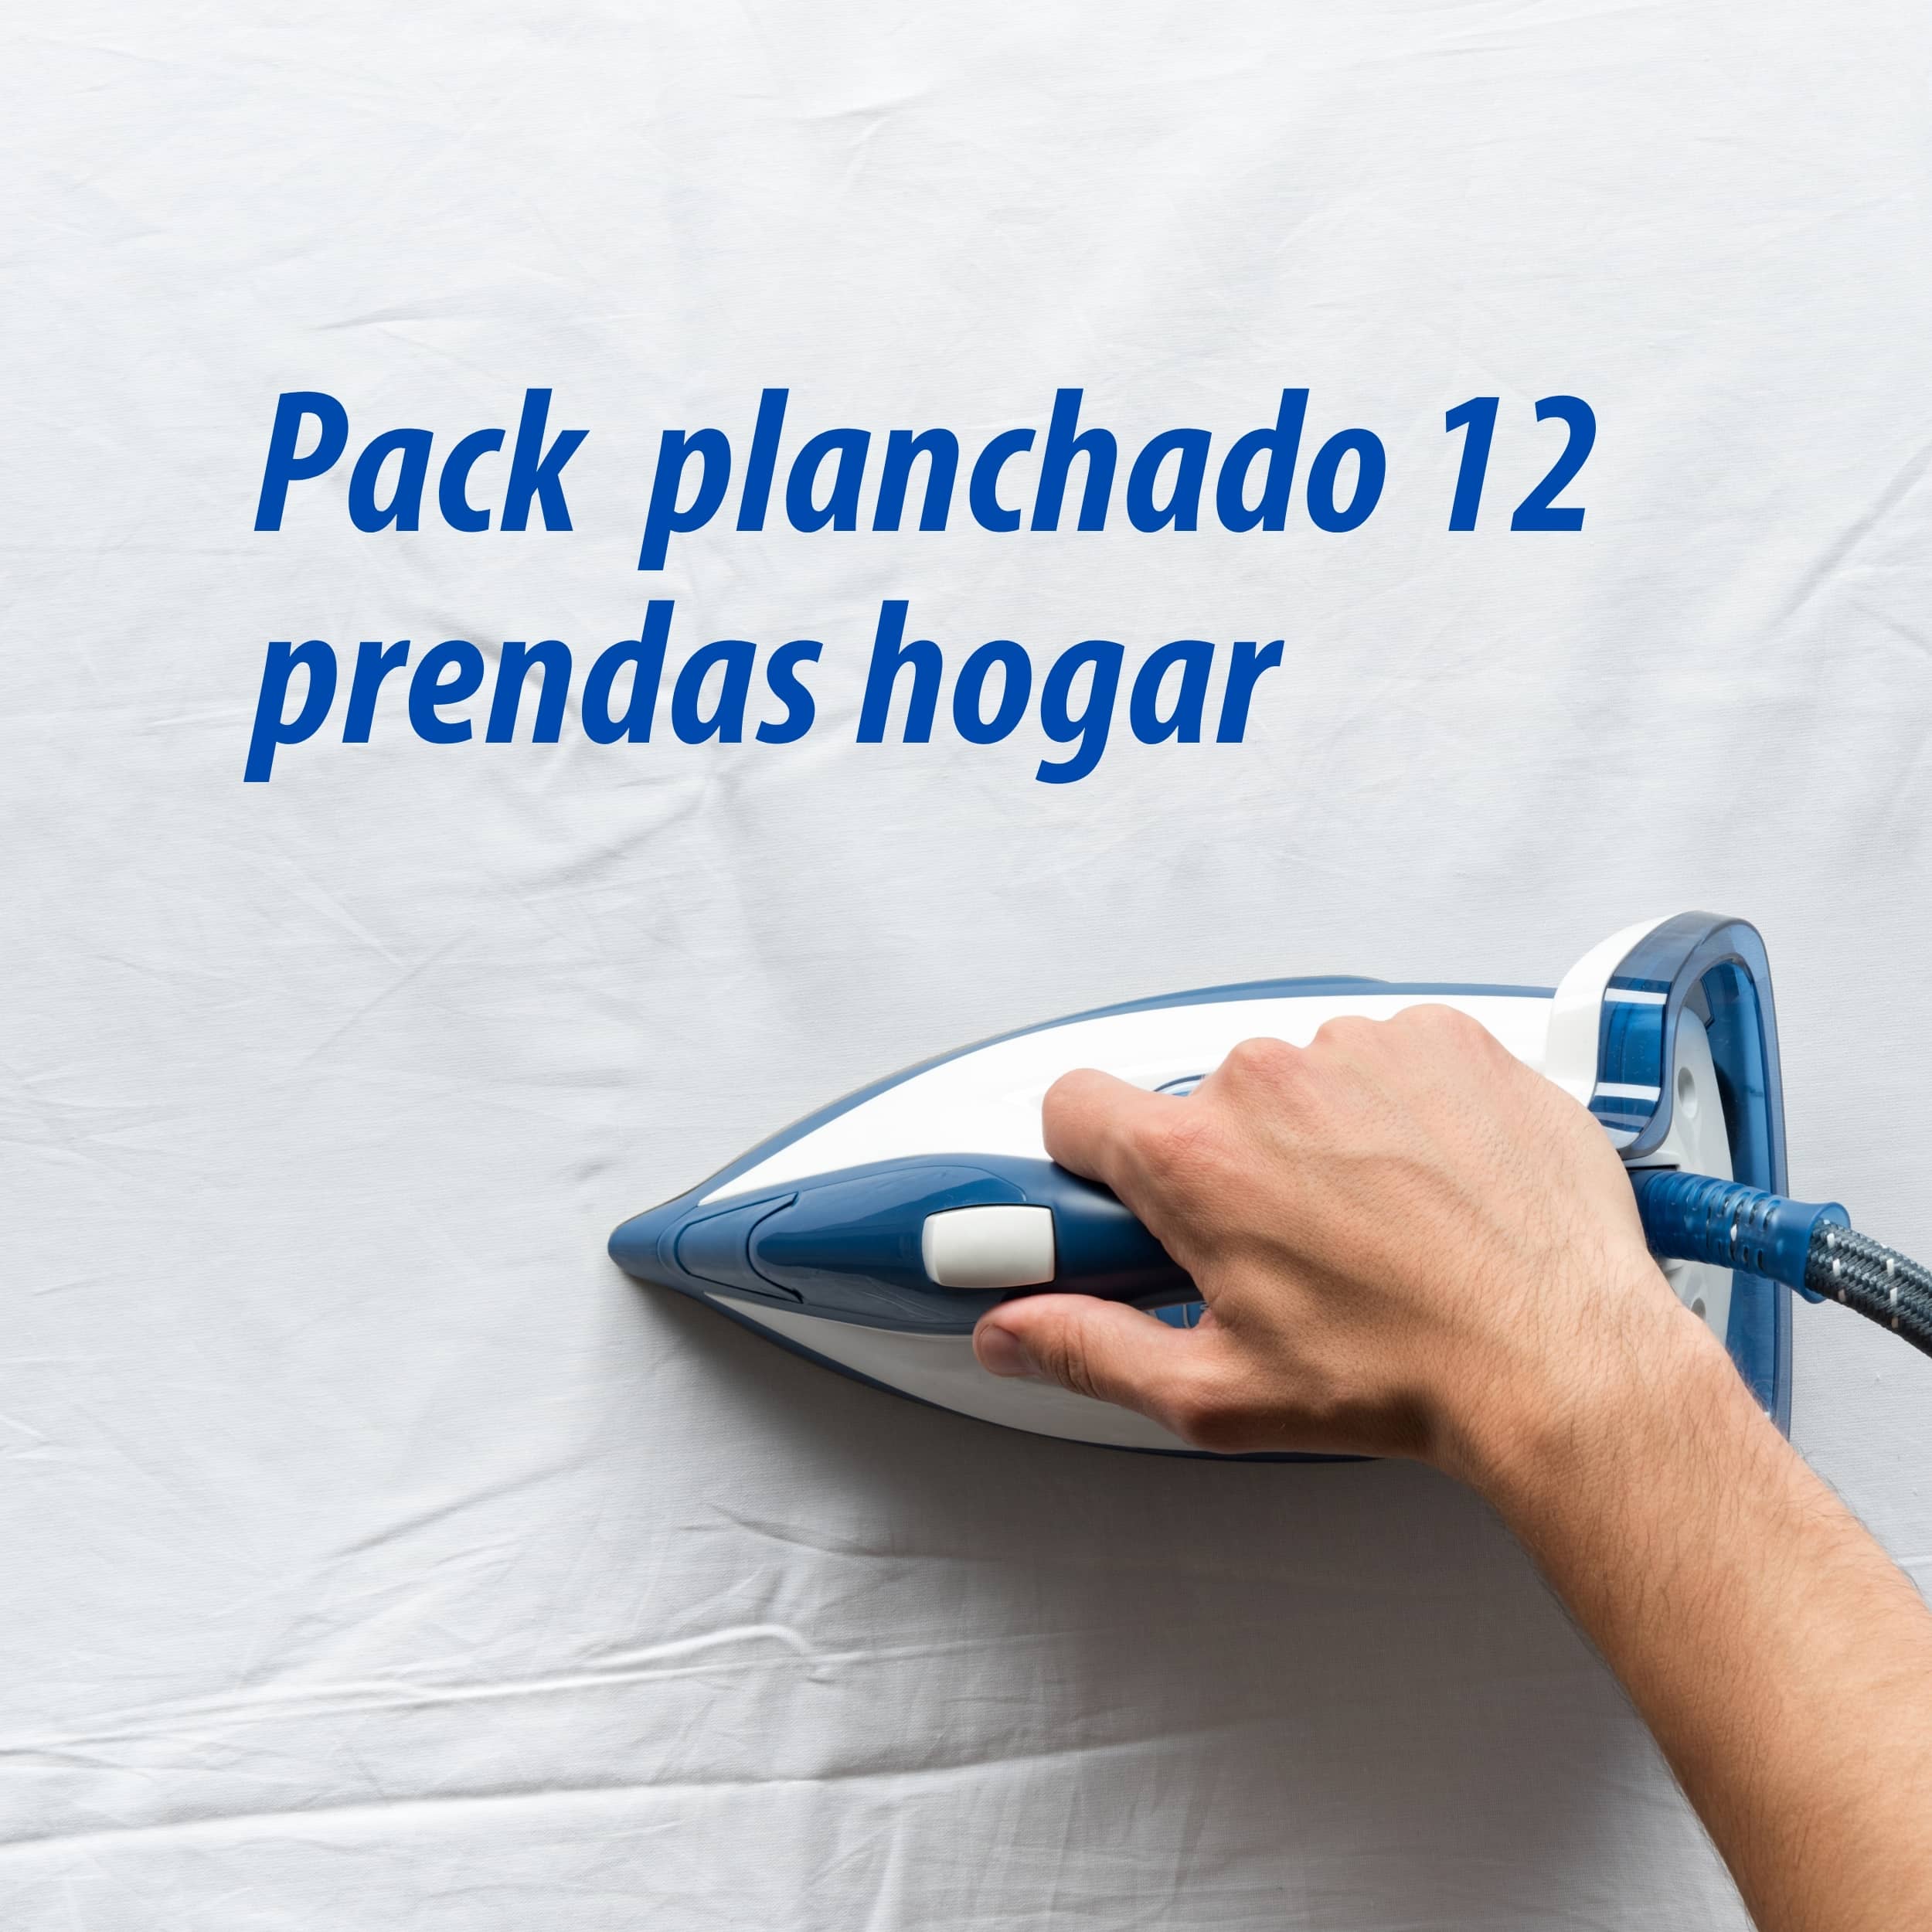 Gasto Mayor circulación Pack planchado 12 prendas ropa hogar - Prontomatic